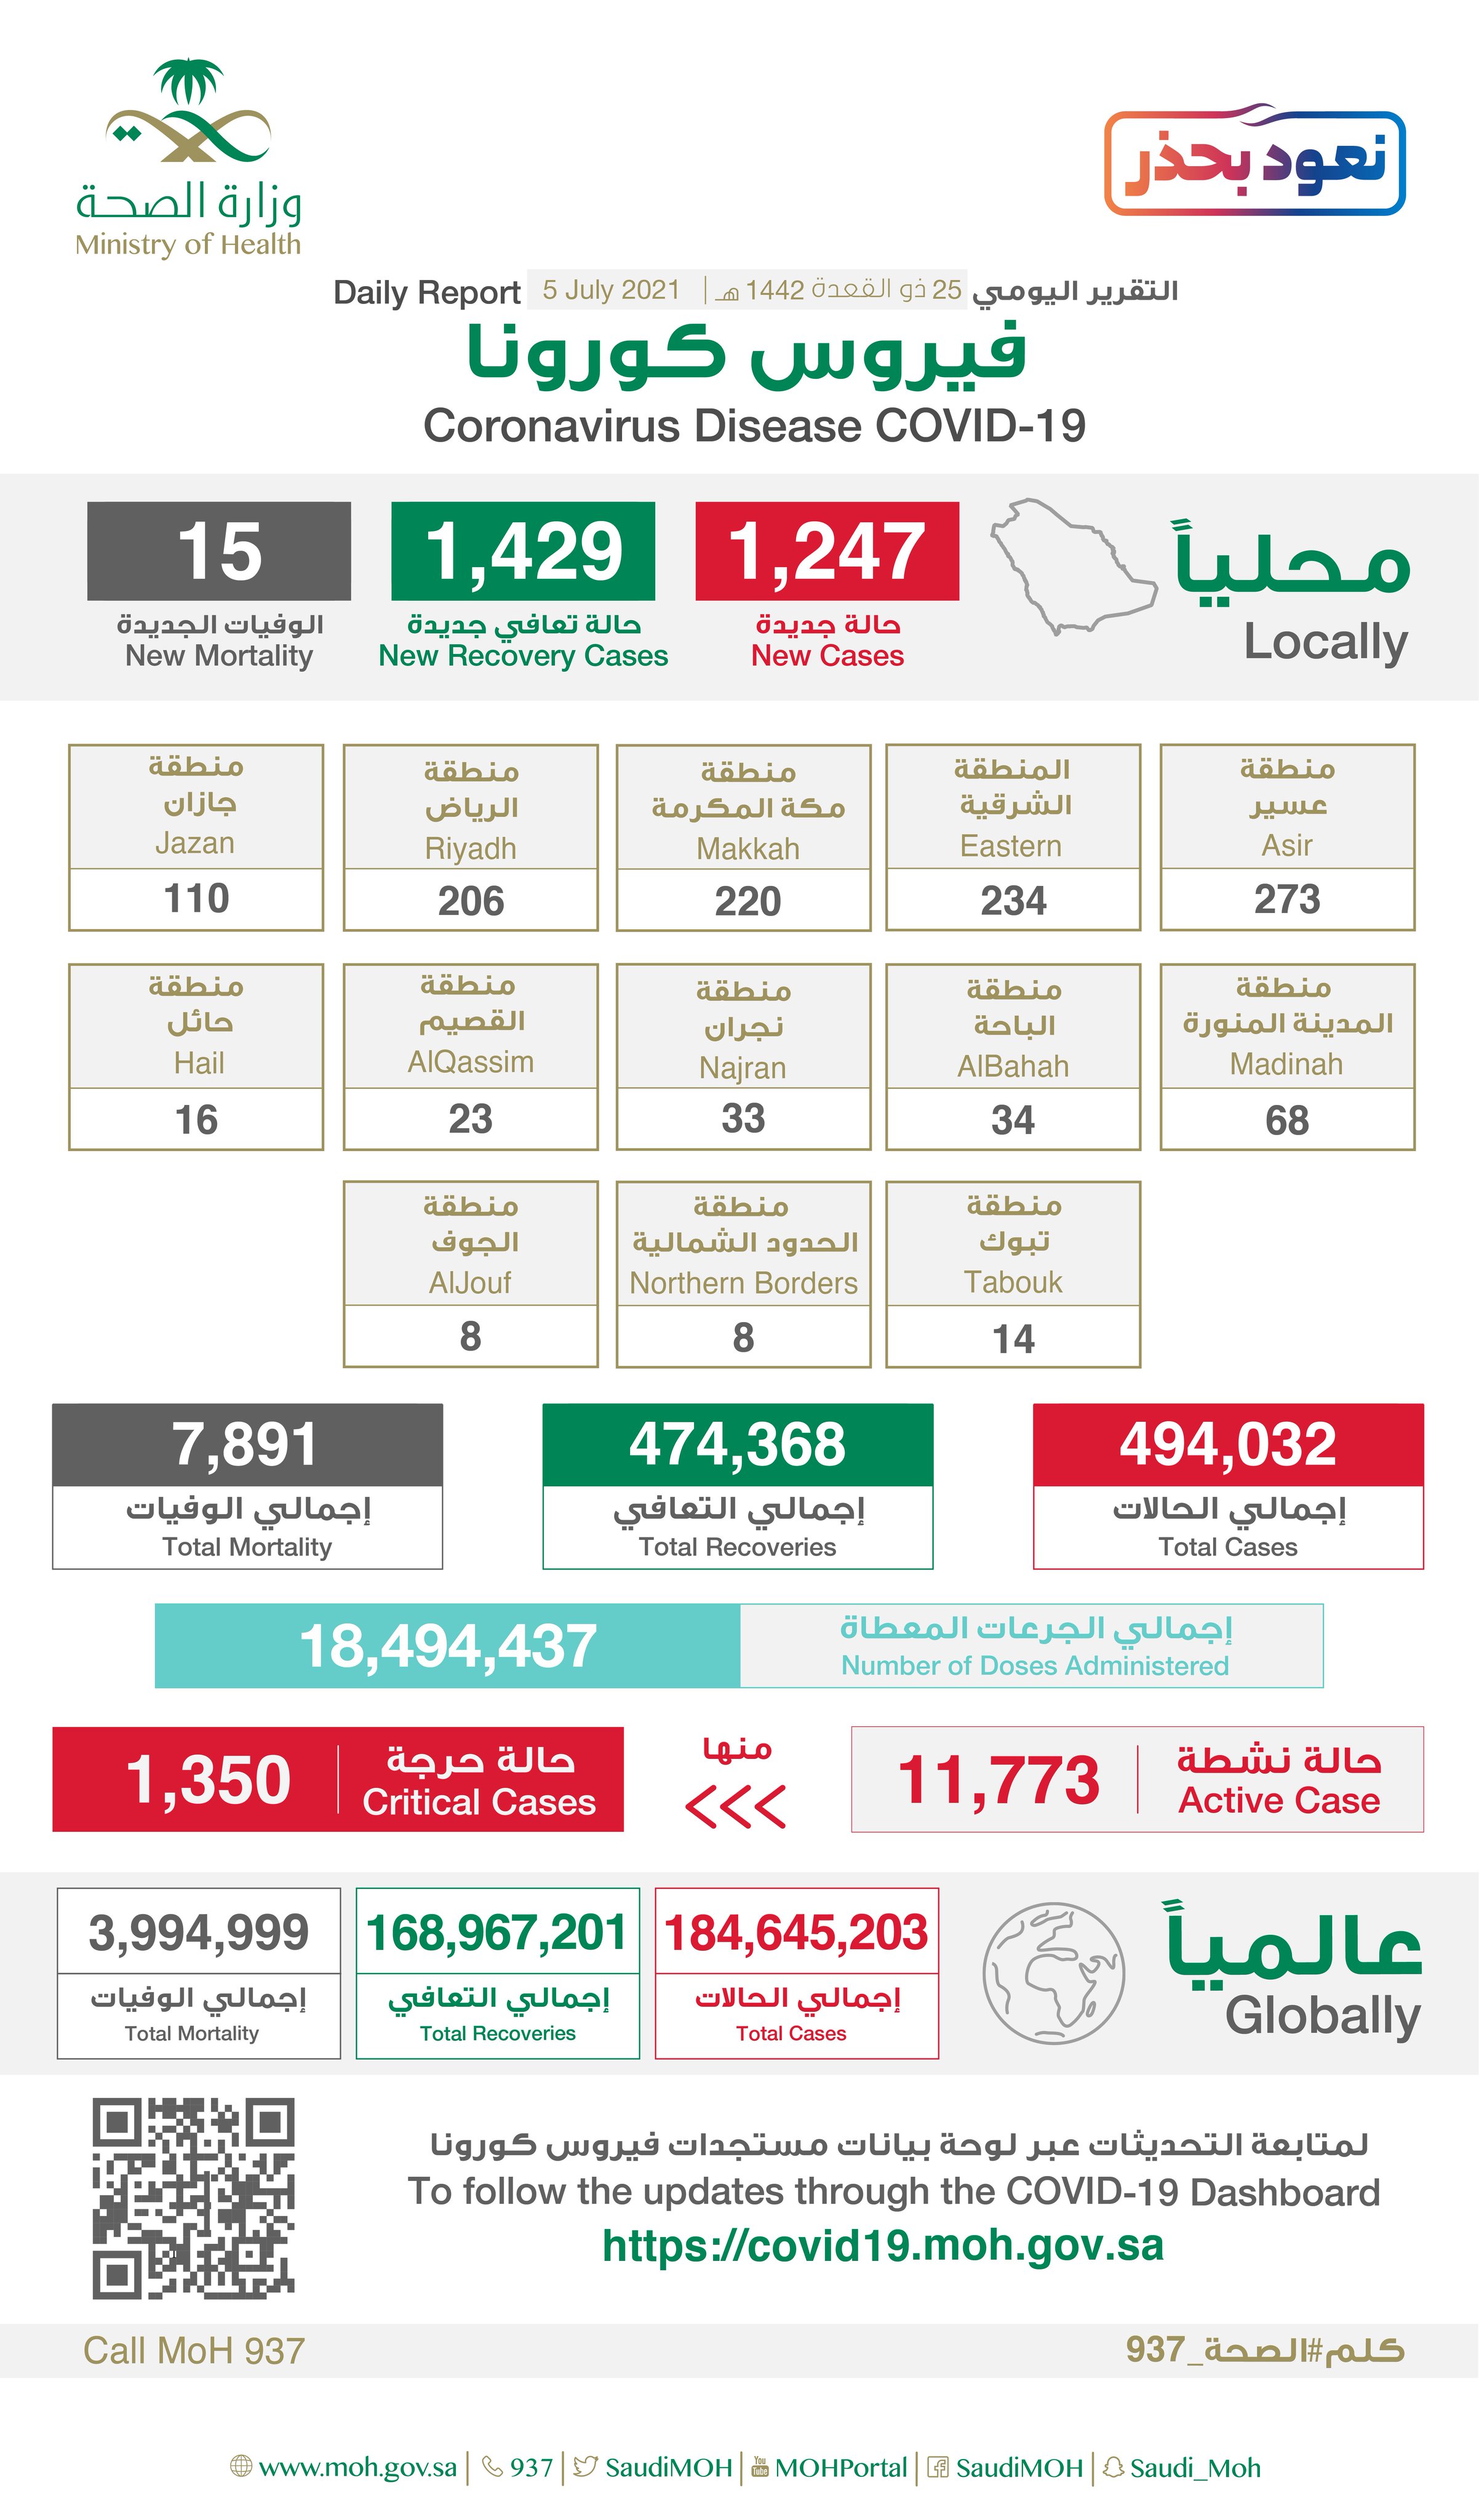 Saudi Arabia Coronavirus : Total Cases :494,032 , New Cases :1,247, Cured : 474,368 , Deaths: 7,891, Active Cases : 11,773